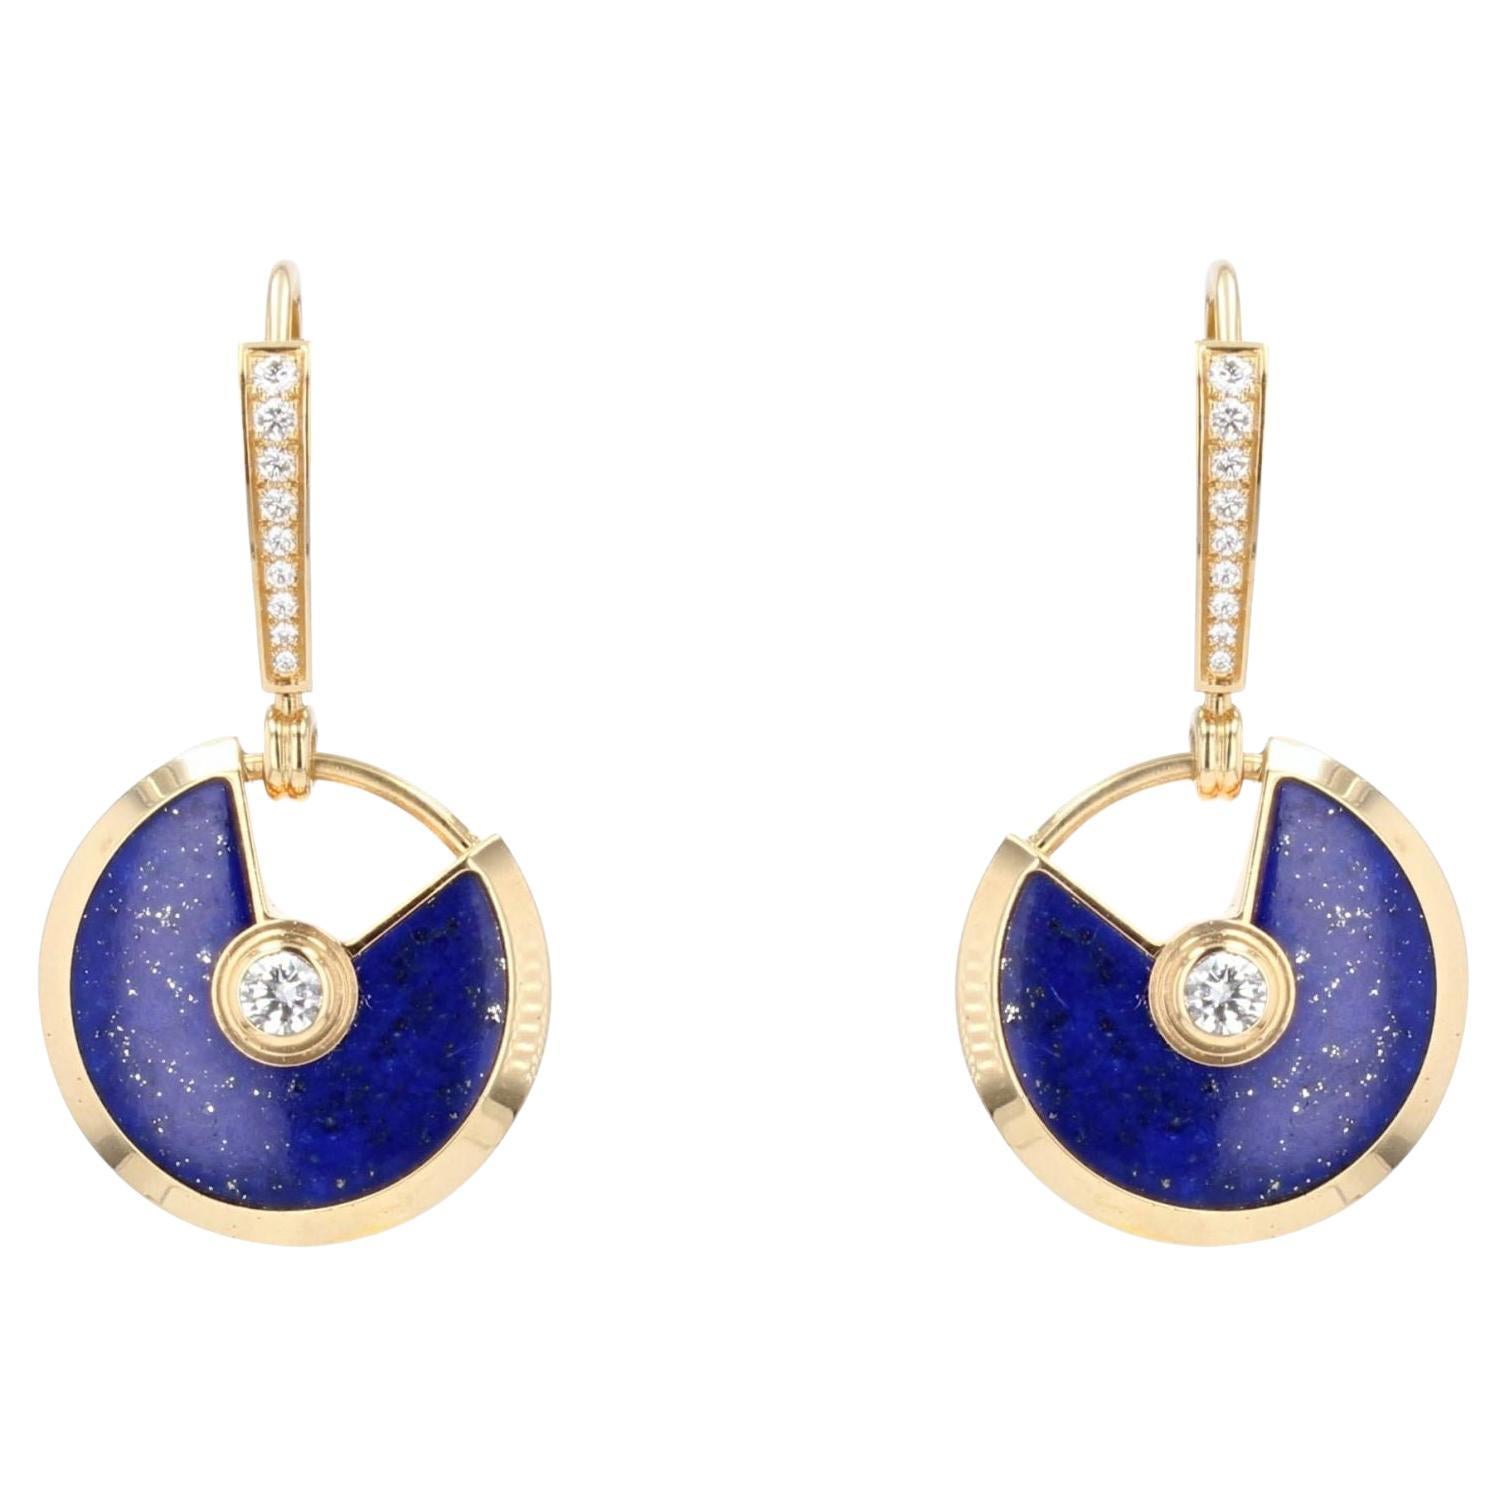 Vintage & Antique Lapis Lazuli Jewelry: Rings, Necklaces & More 